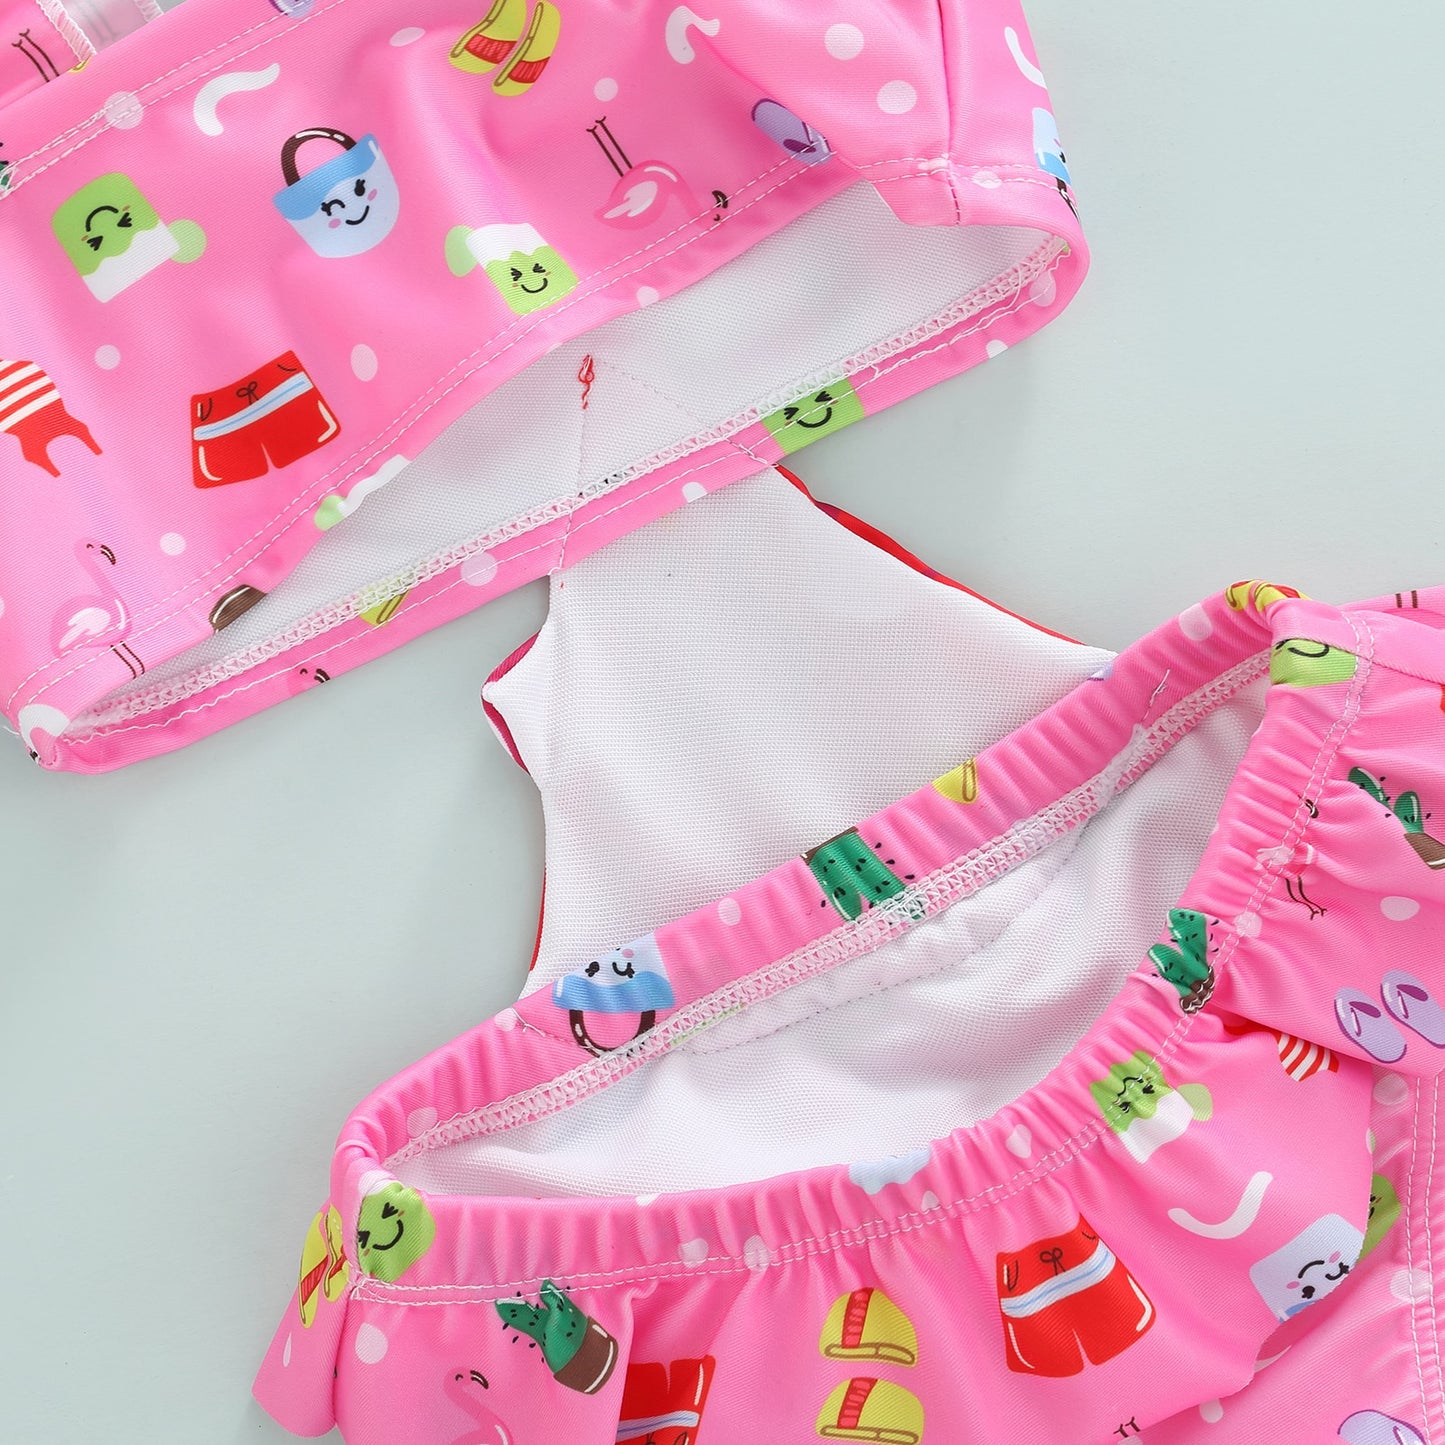 Kids Baby Girl Bikini Summer Cute Watermelon Print Sleeveless Swimming Suit Children Hollow Out Waist Bathing Suit 1-6Y